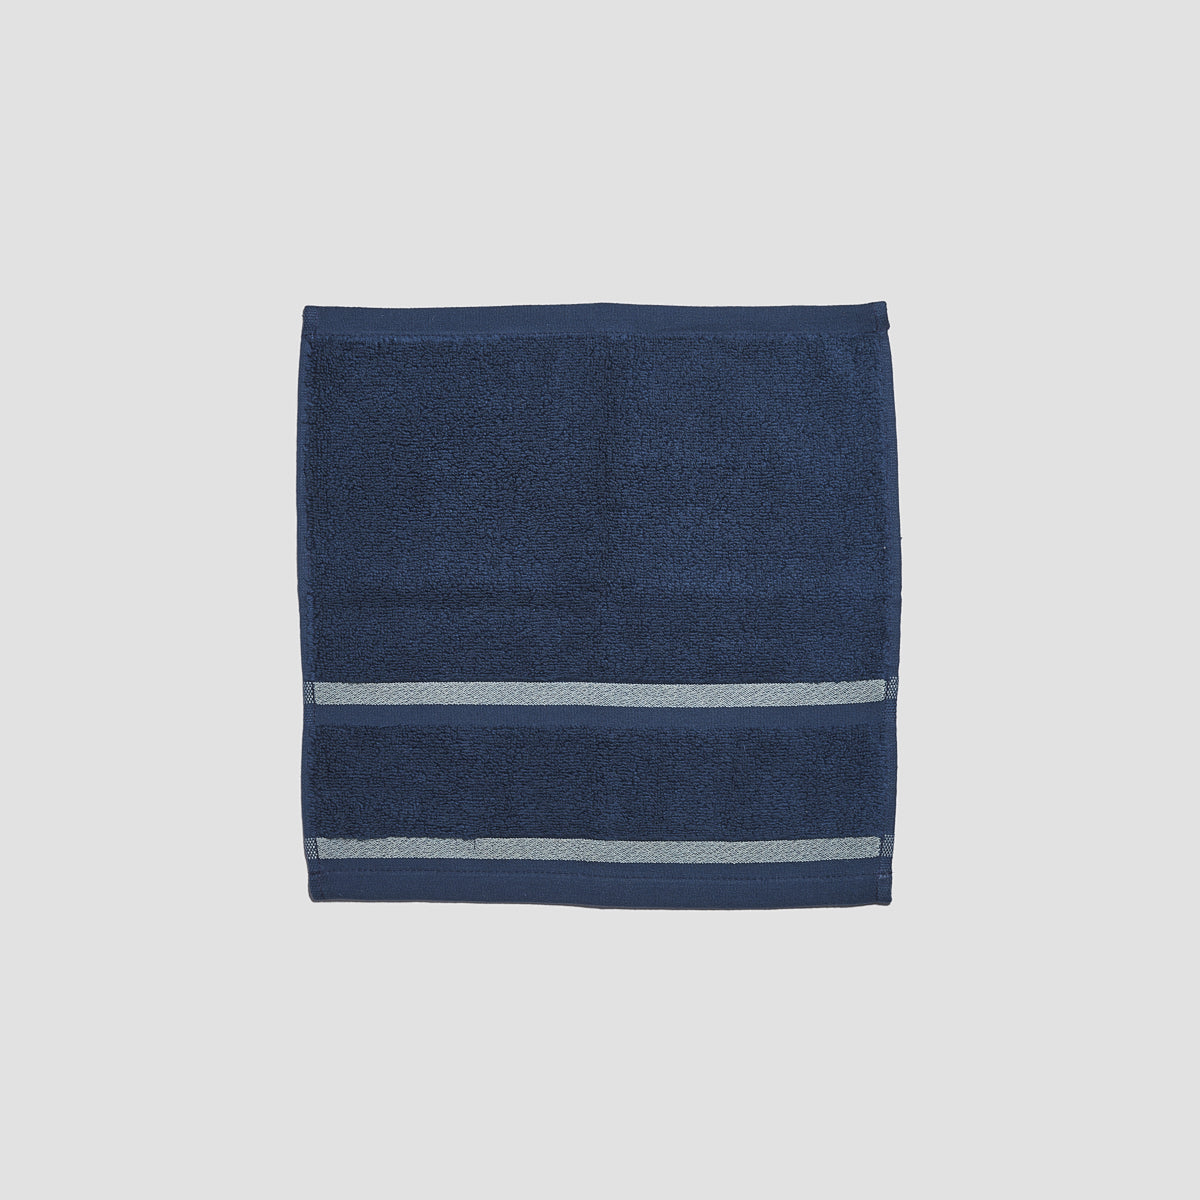 Moonlit Blue Washcloth